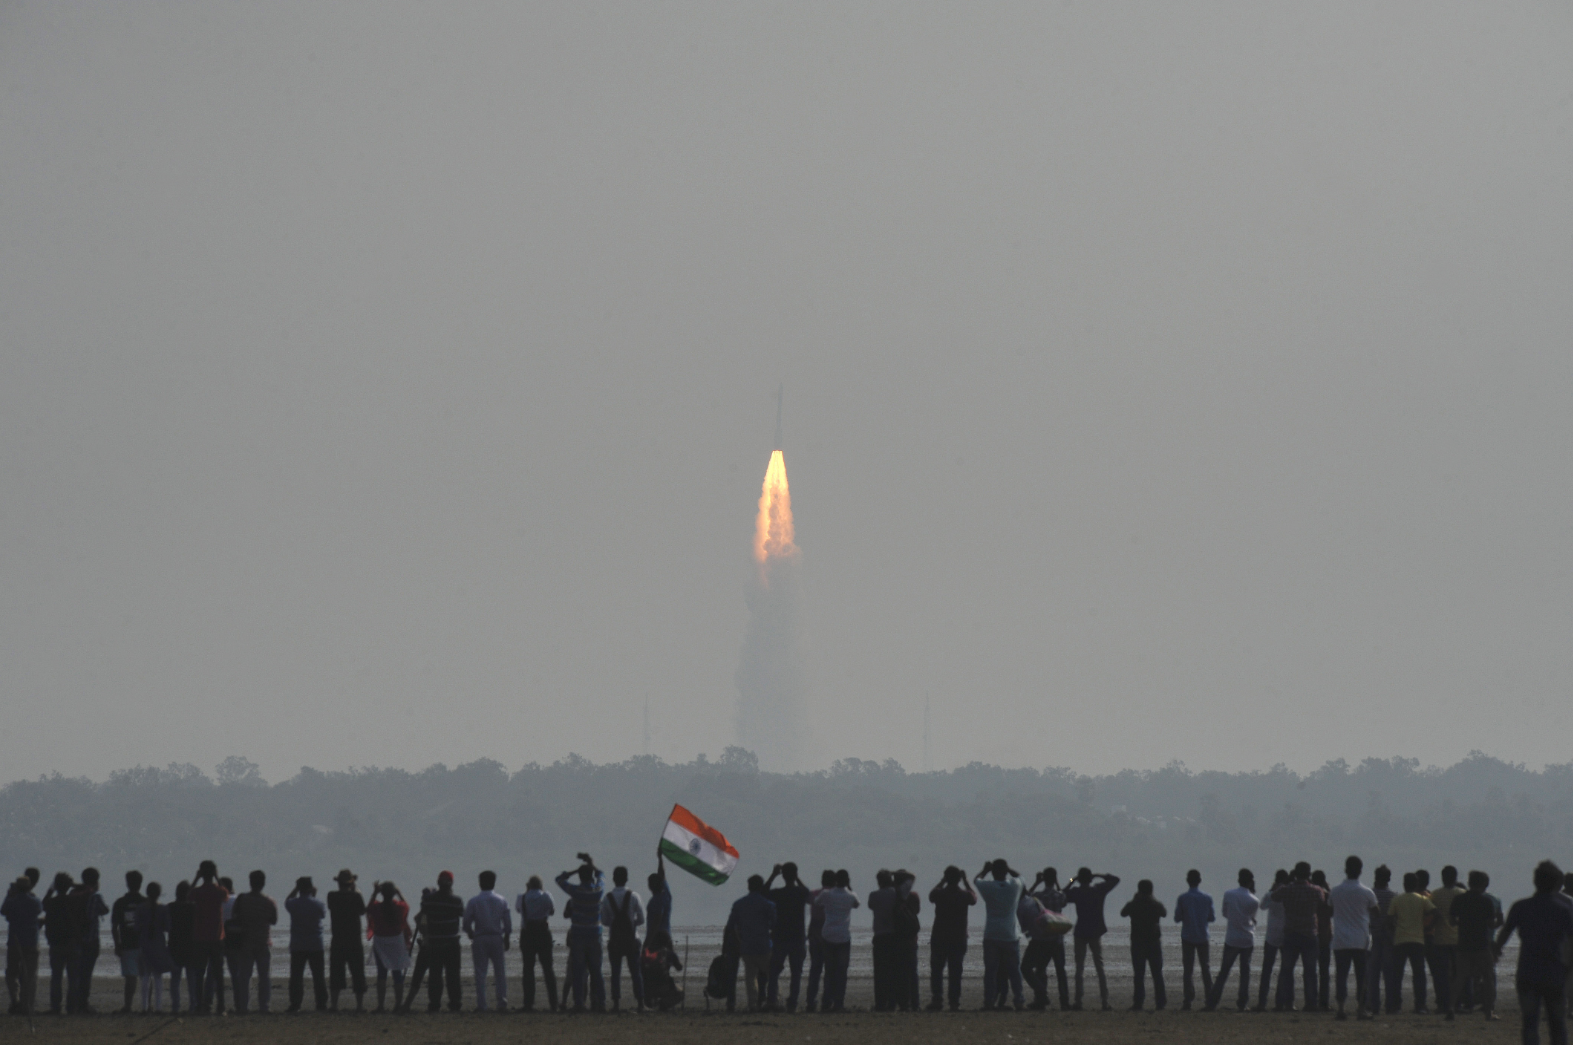 Launch of PSLV-C37 carrying 104 satellites near the spaceport of Sriharikota, Andhra Pradesh. Source: Zuma/Global Look Press